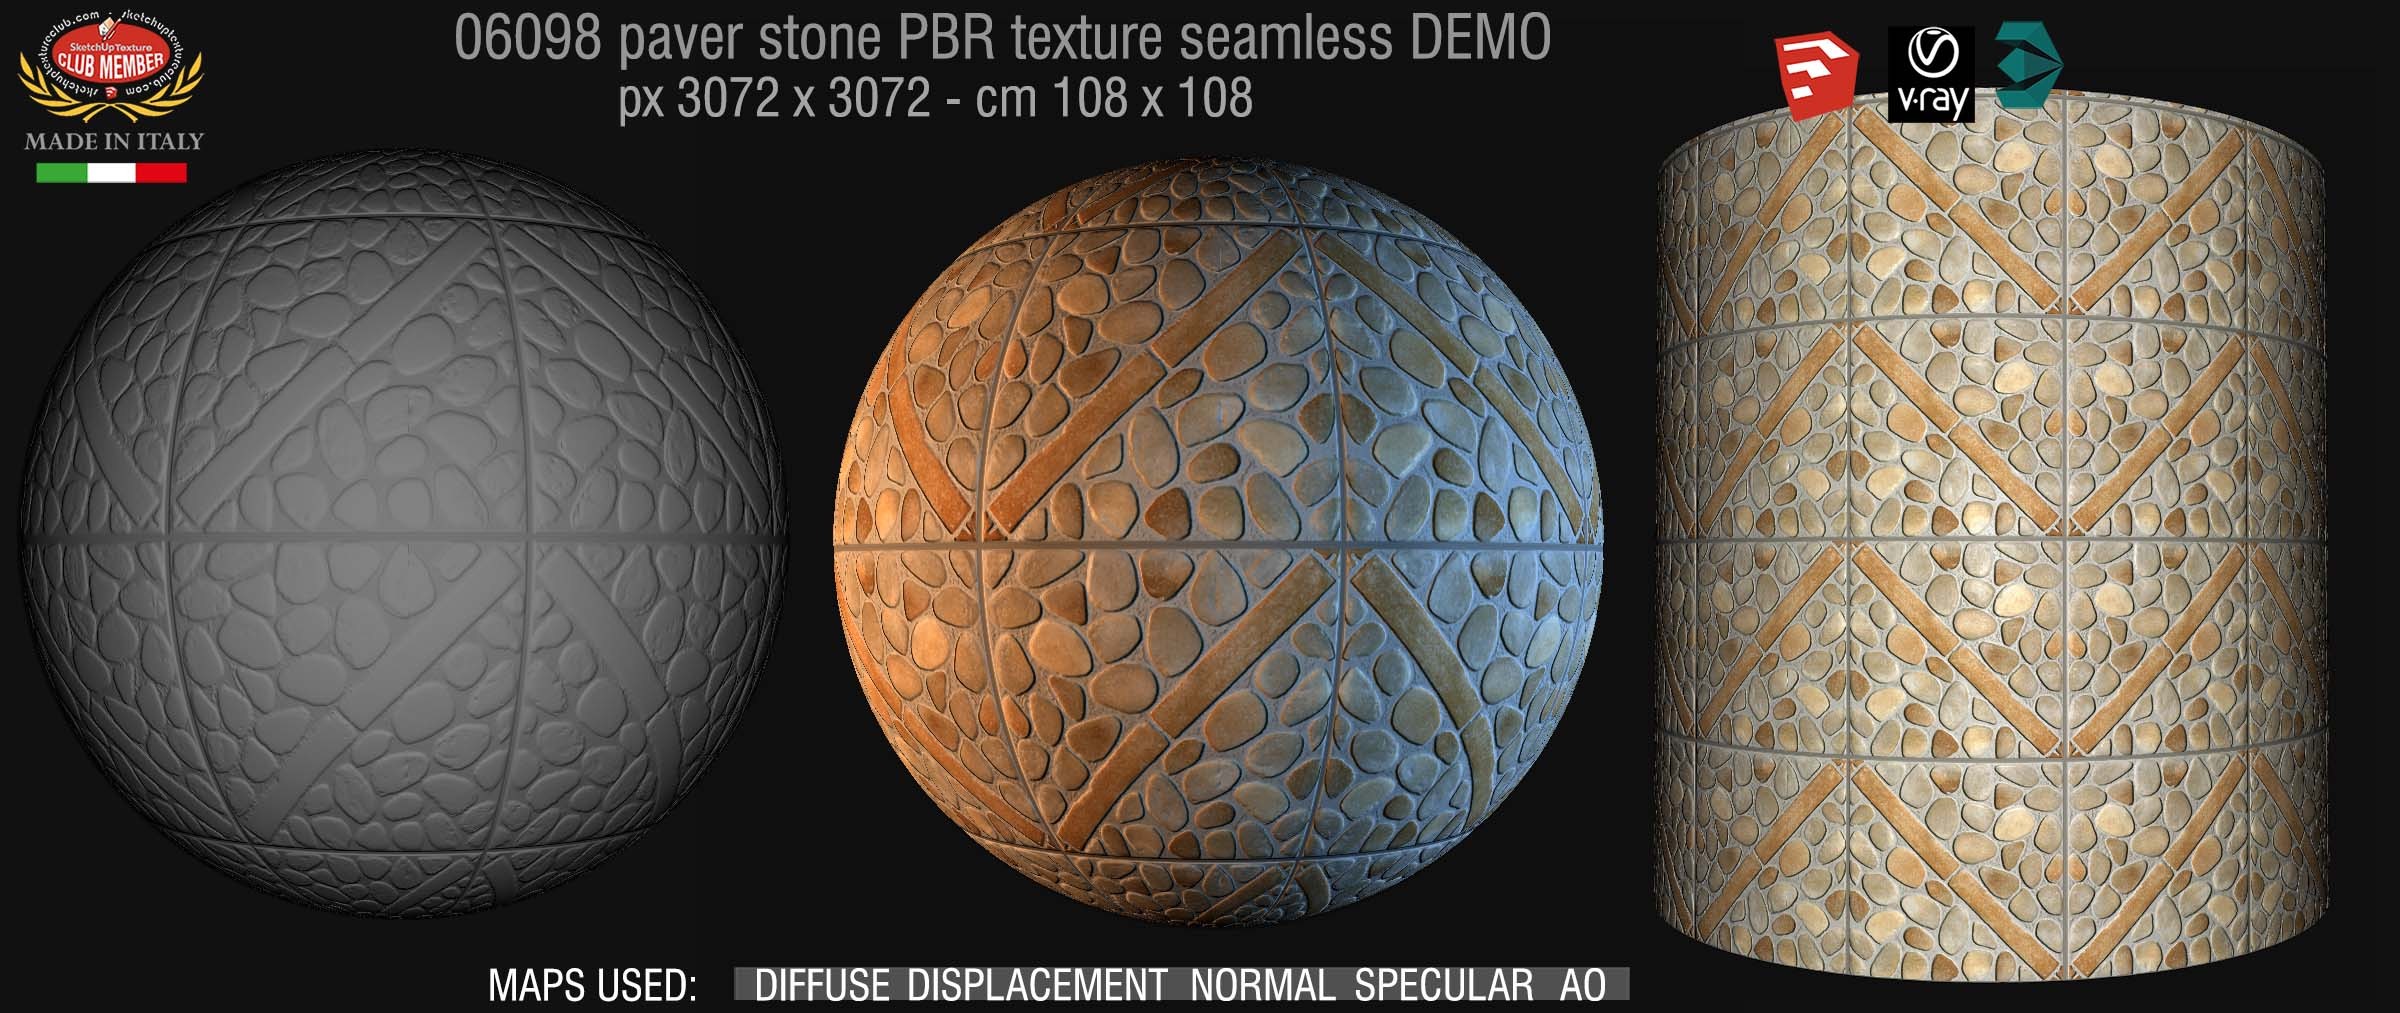 06098 paver stone PBR texture seamless DEMO